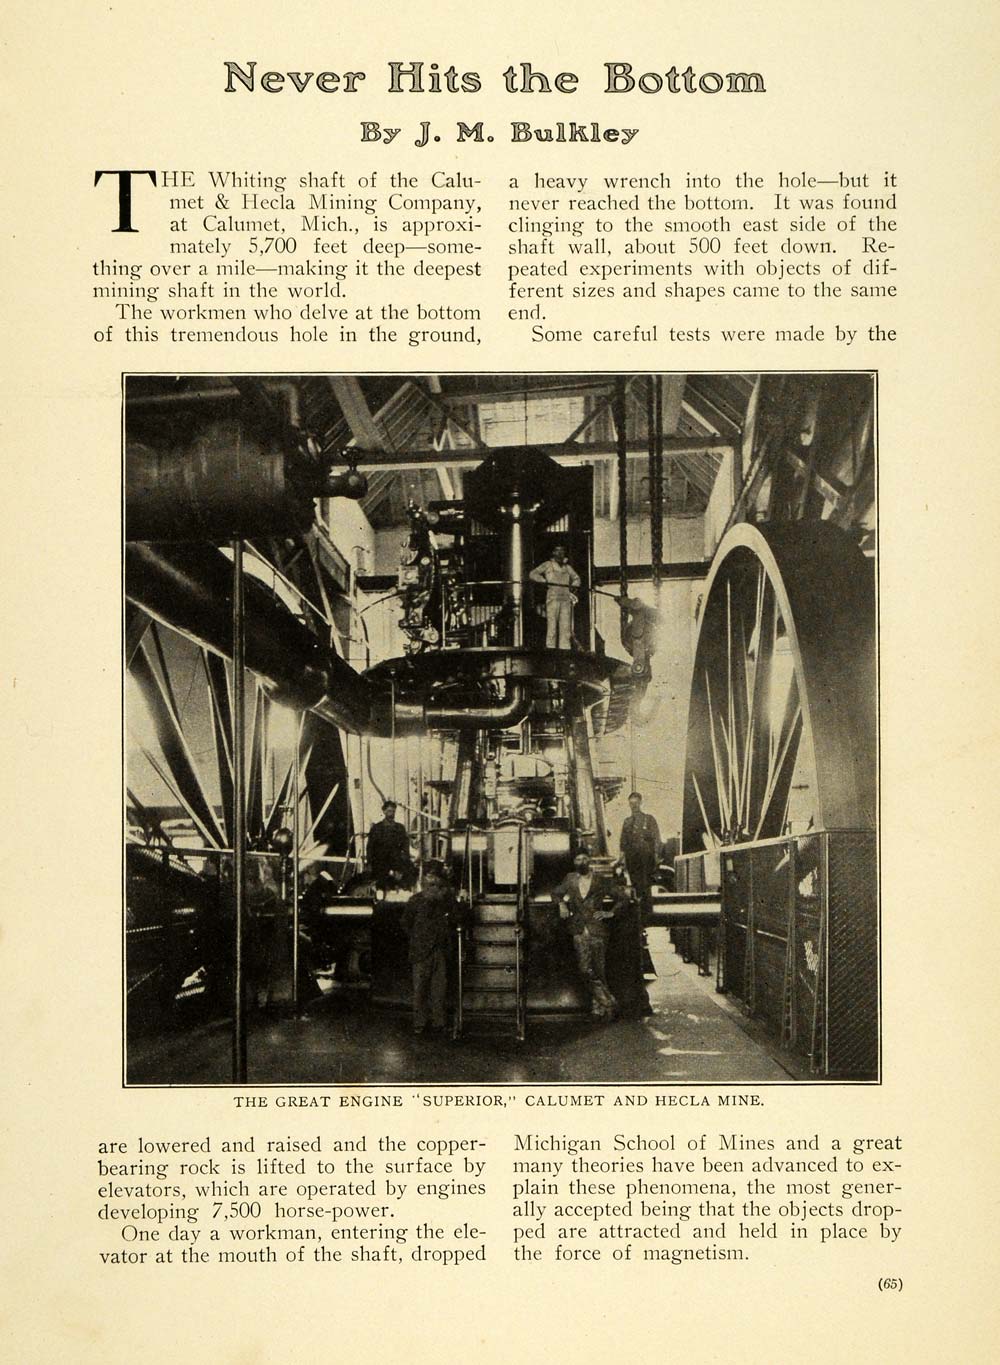 1906 Print Whiting Shaft Calumet & Hecla Mining Co. - ORIGINAL HISTORIC TW3